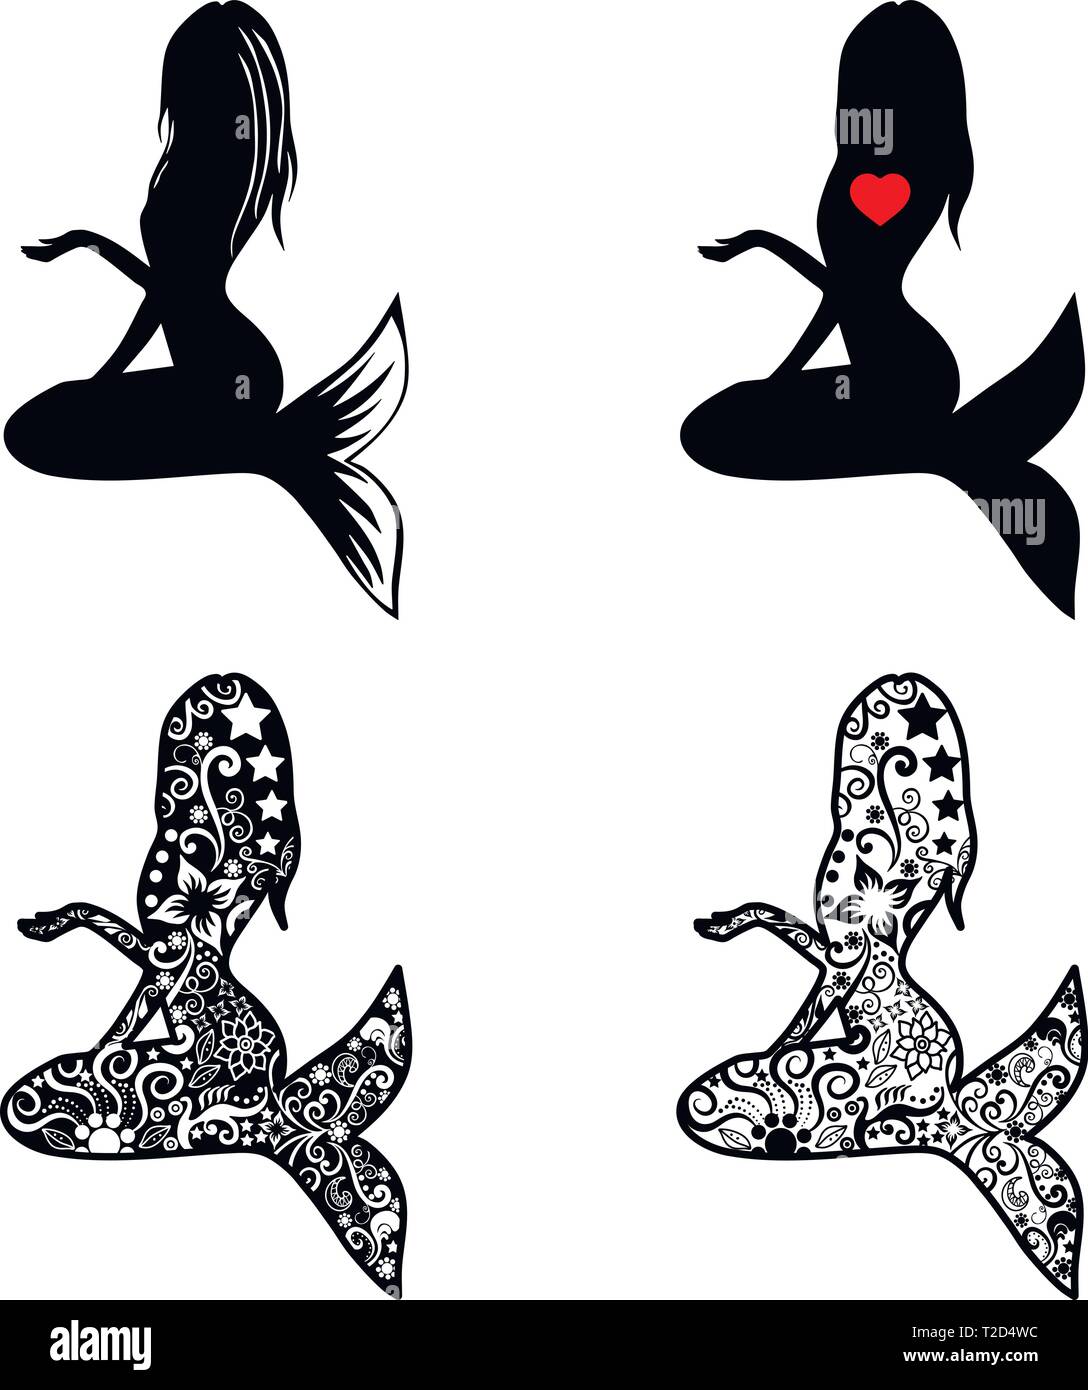 Mermaid silhouettes set Stock Vector